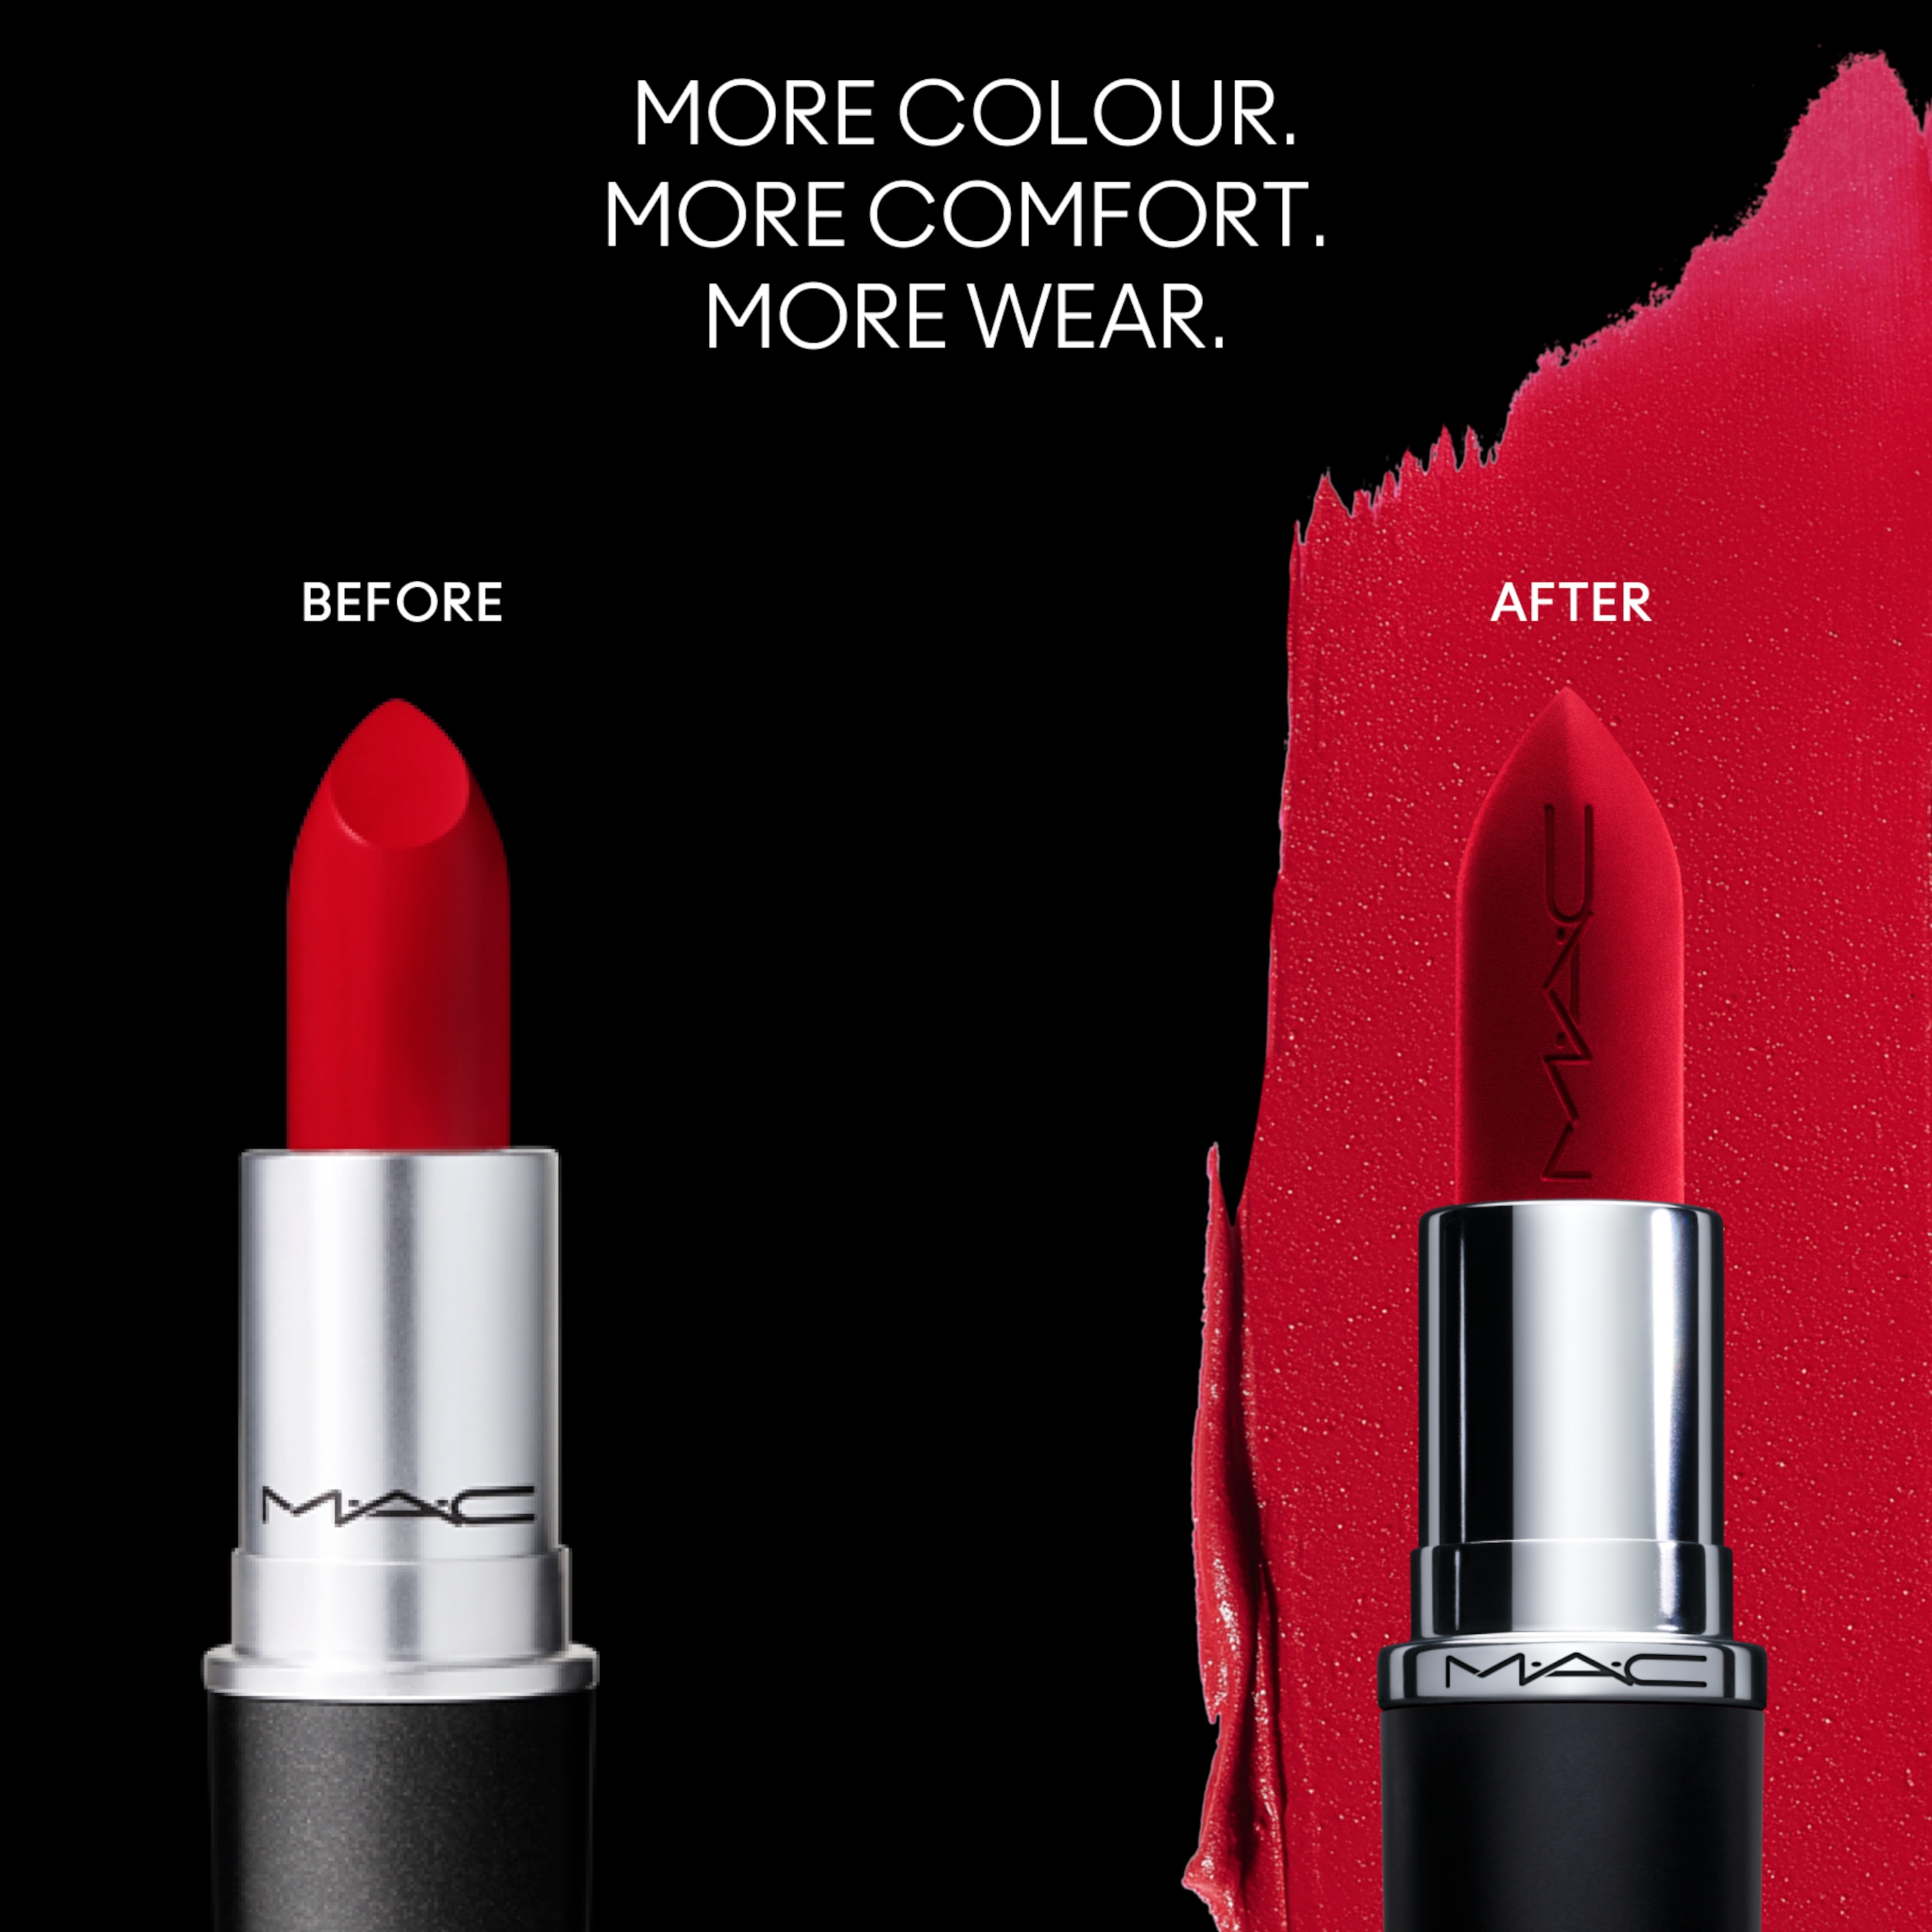 MAC Cosmetics, Makeup, Mac Honeylove Matte Lipstick Light Beige Toned  With Rose